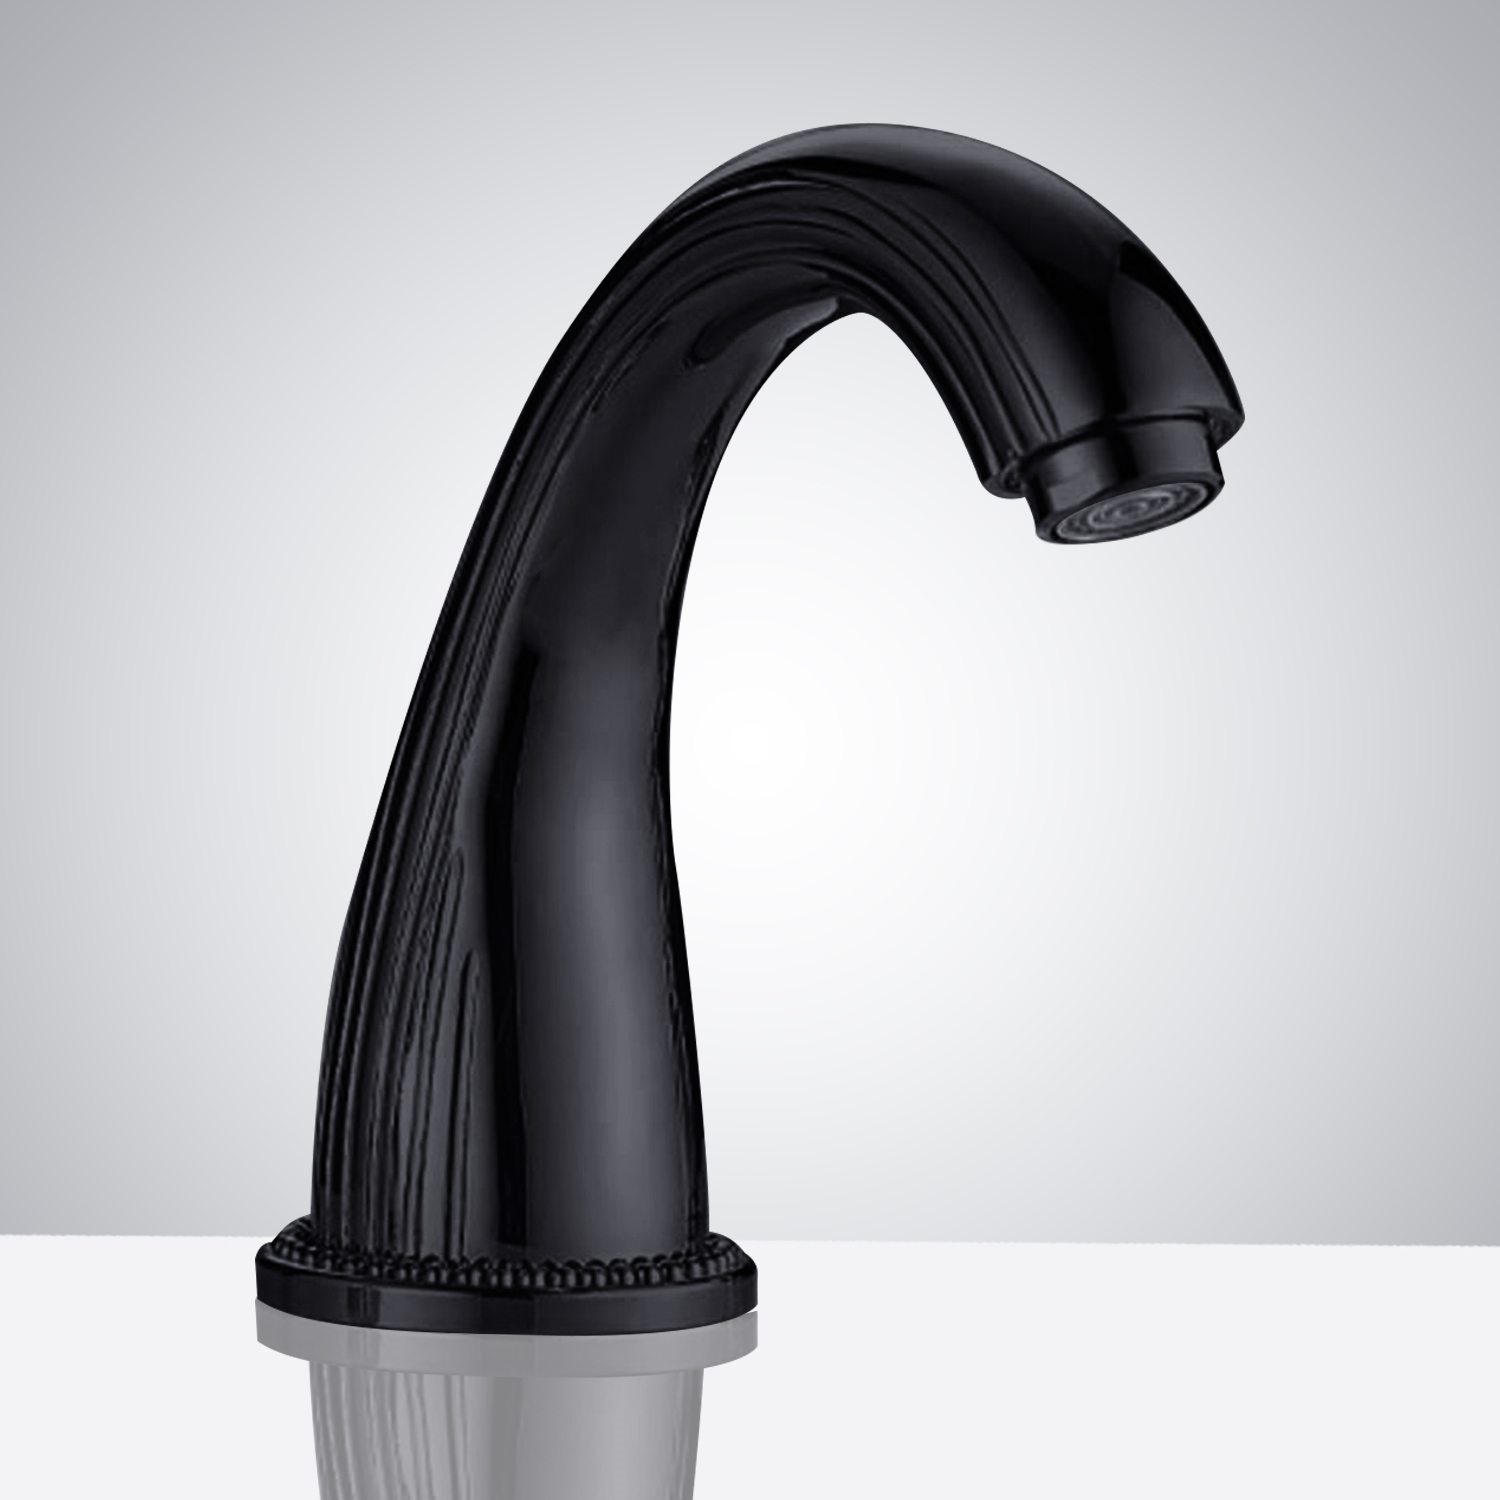 Fontana Commercial Automatic Infrared Matte Black Sensor Faucet